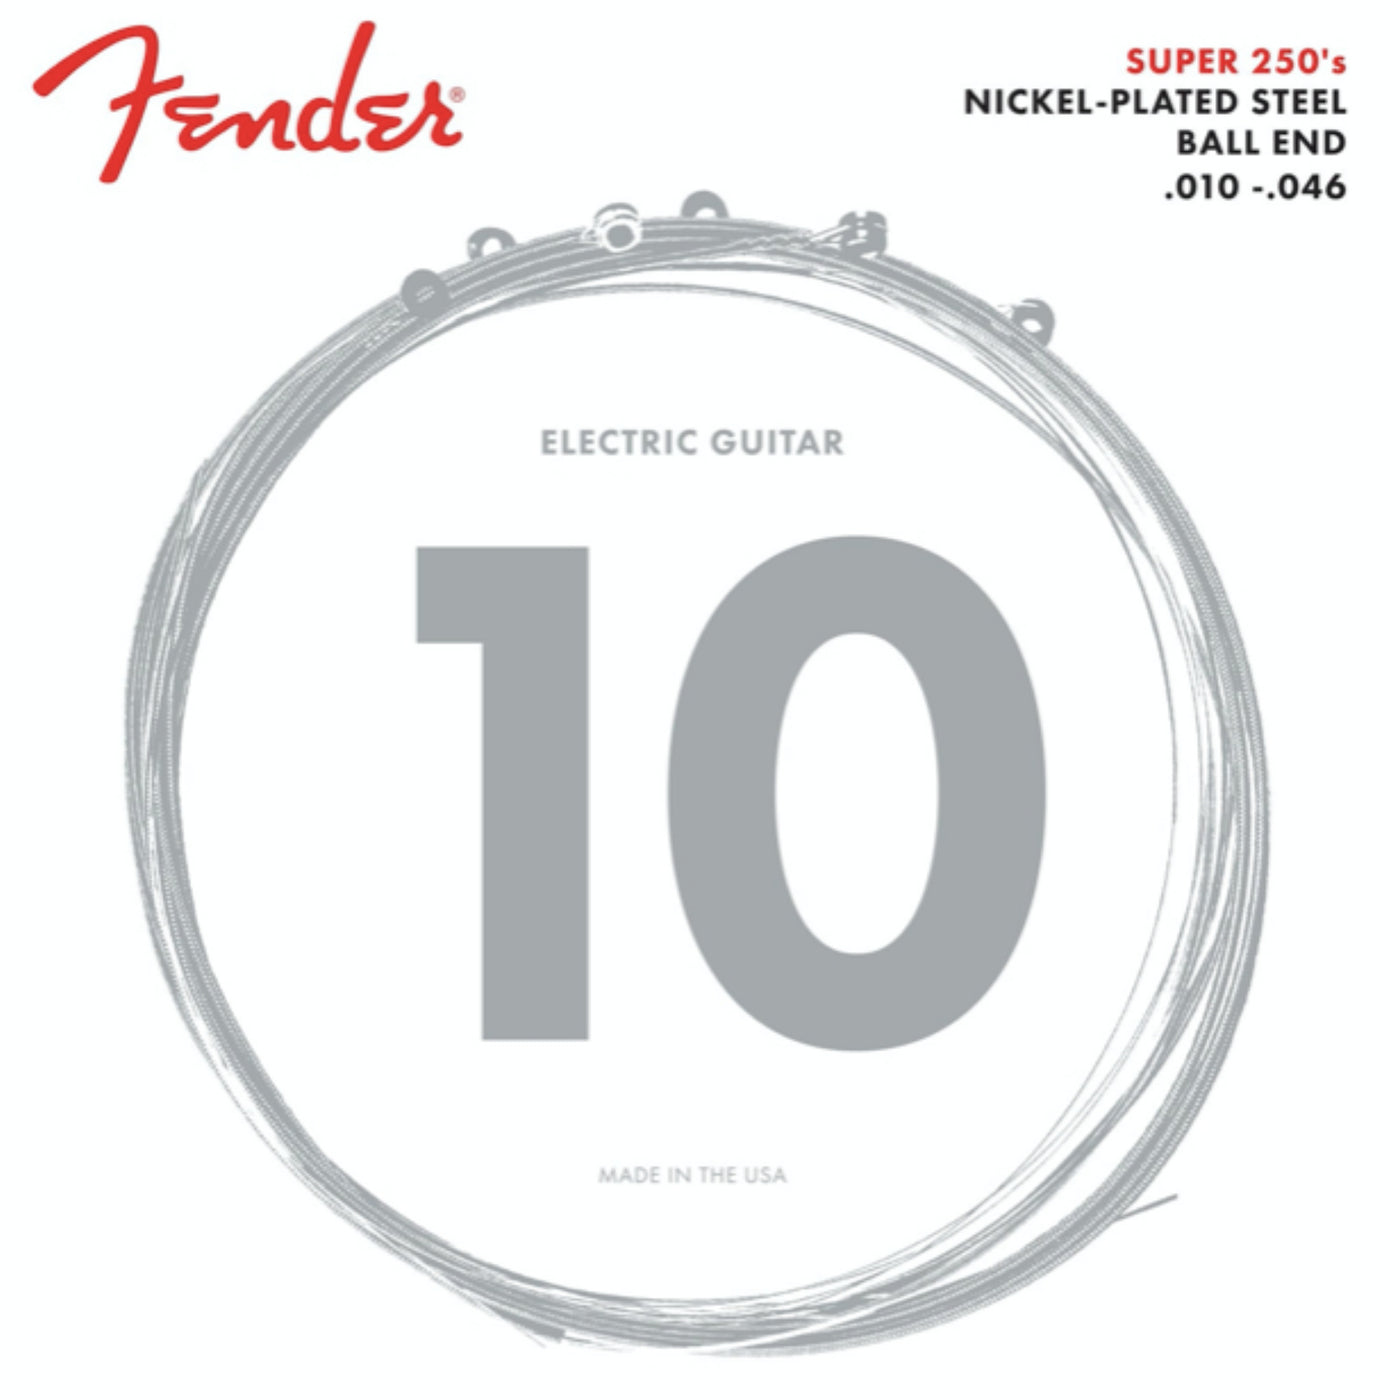 Fender Super 250s Nickel-Plated Steel Ball End Electric Guitar Strings .010-.046 Gauges (0730250406)